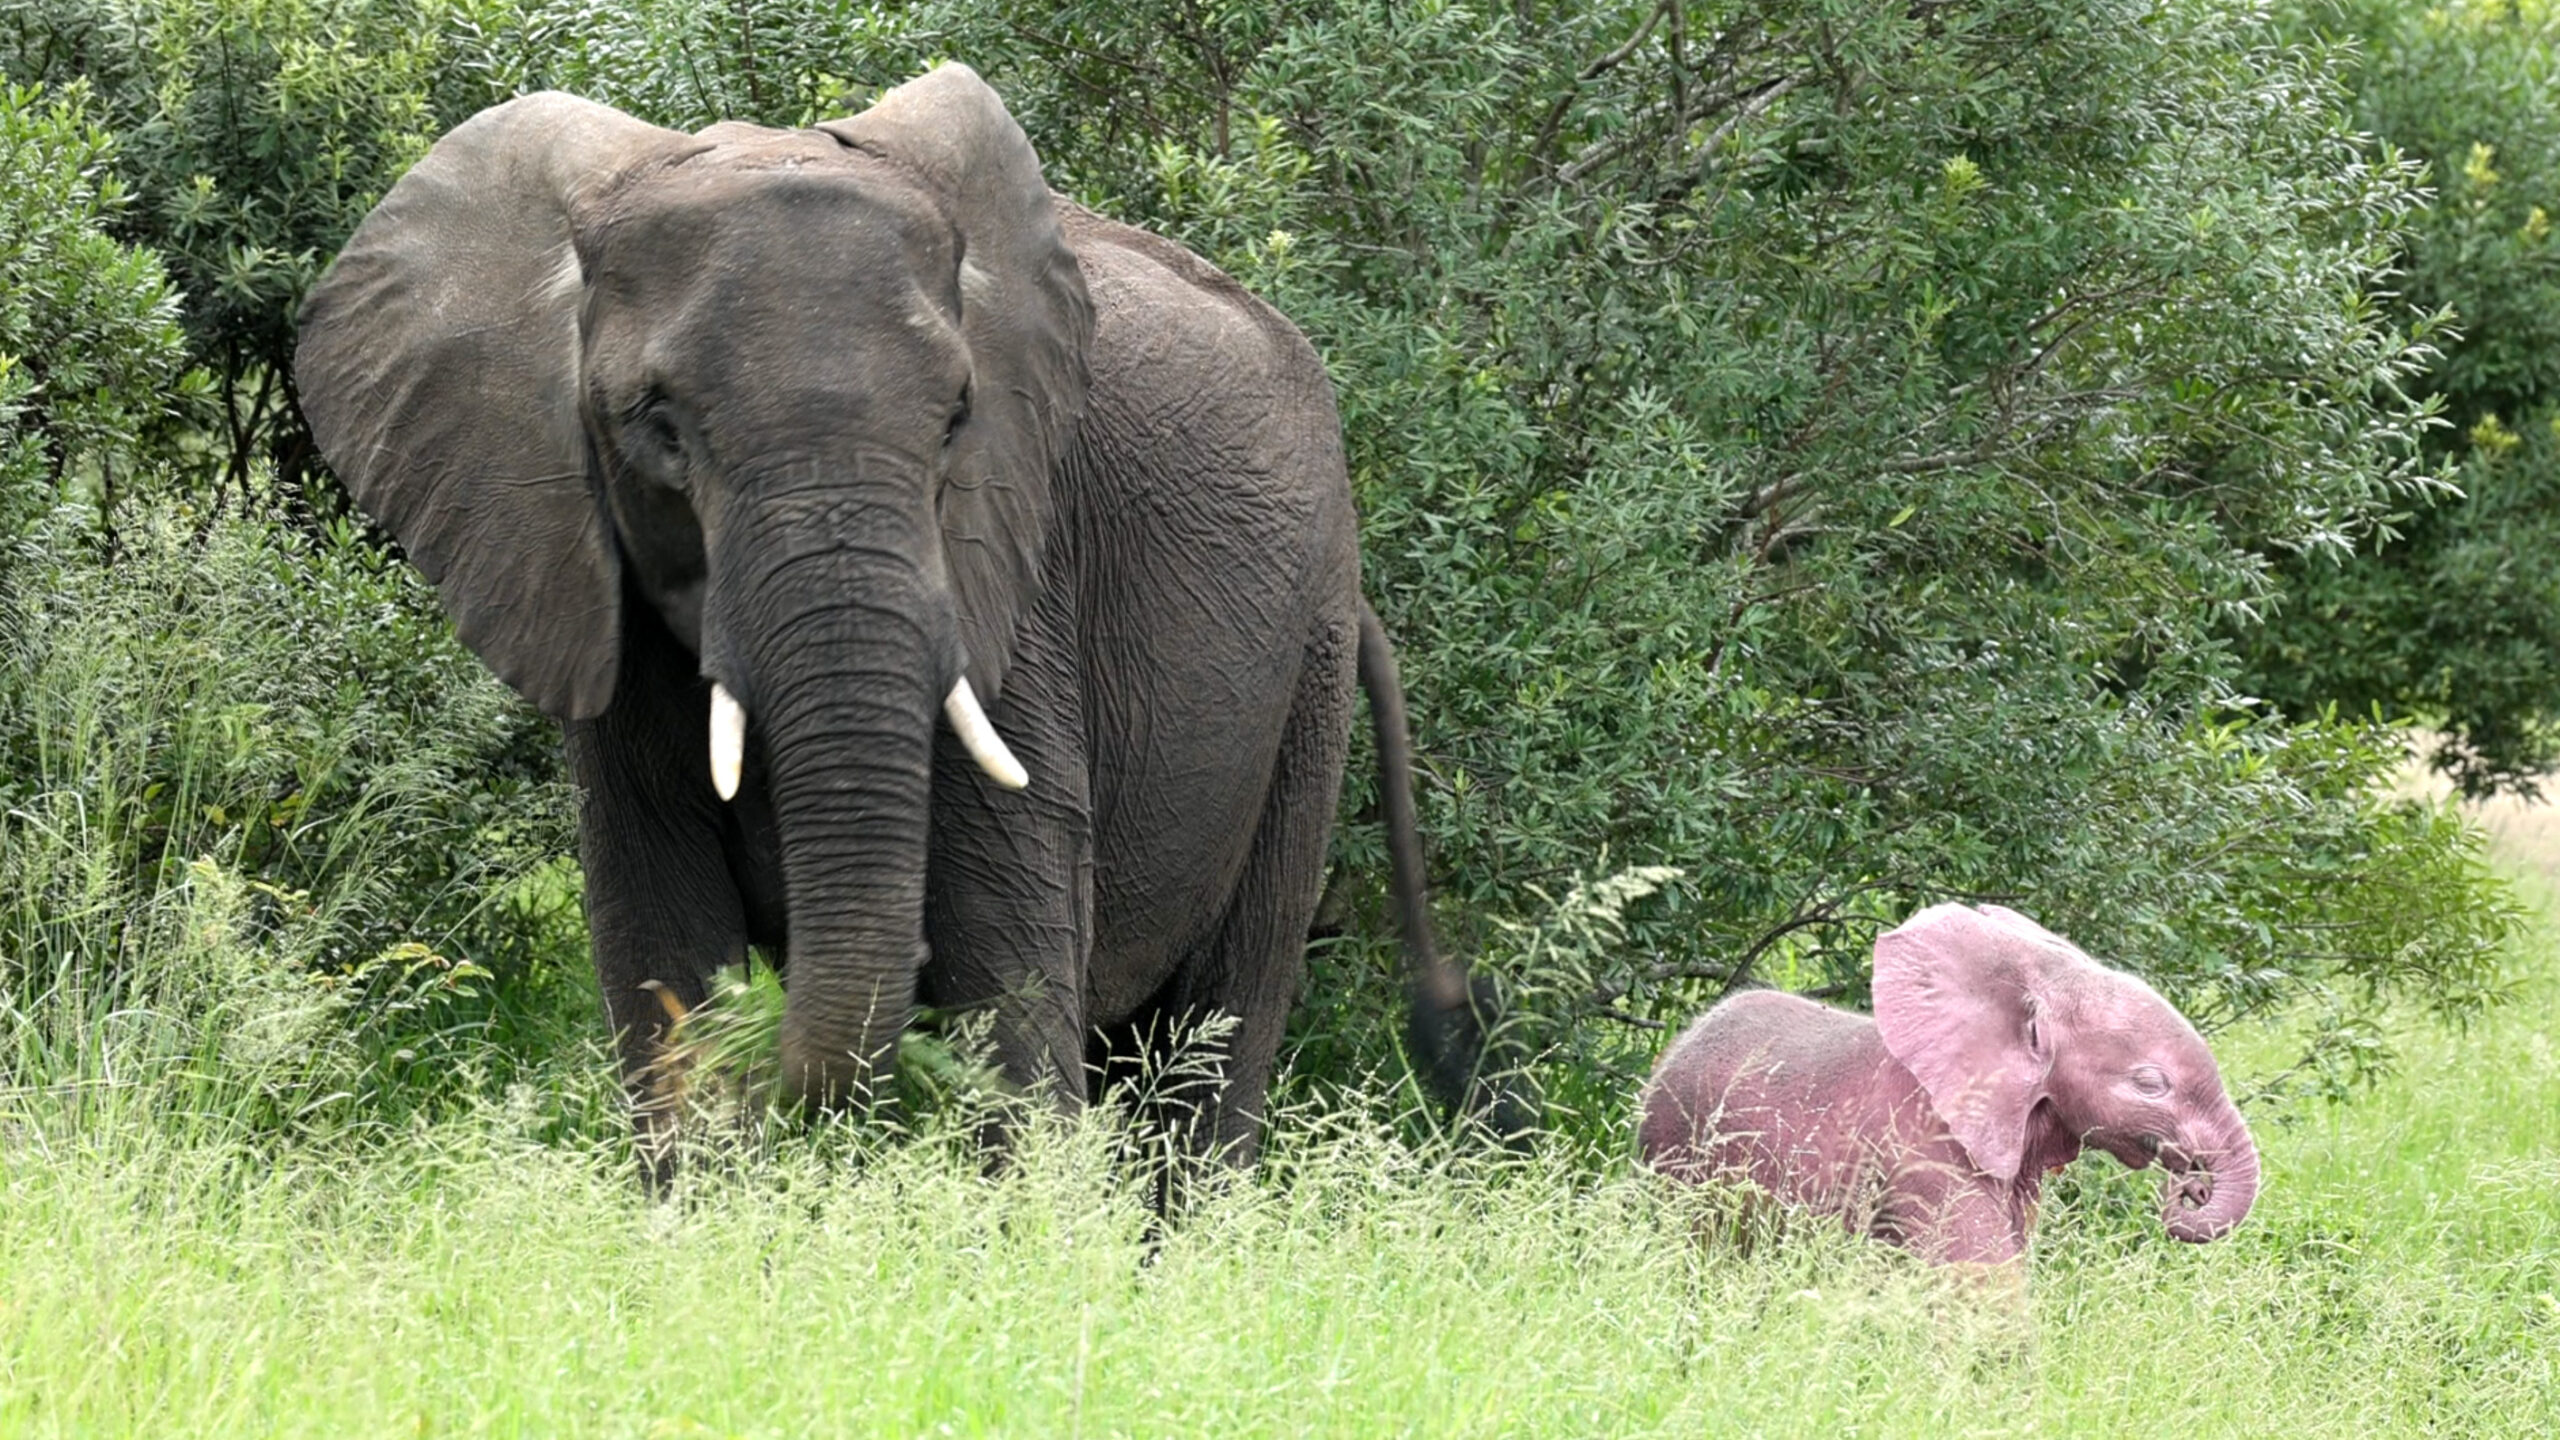 Meet the Pink Elephant